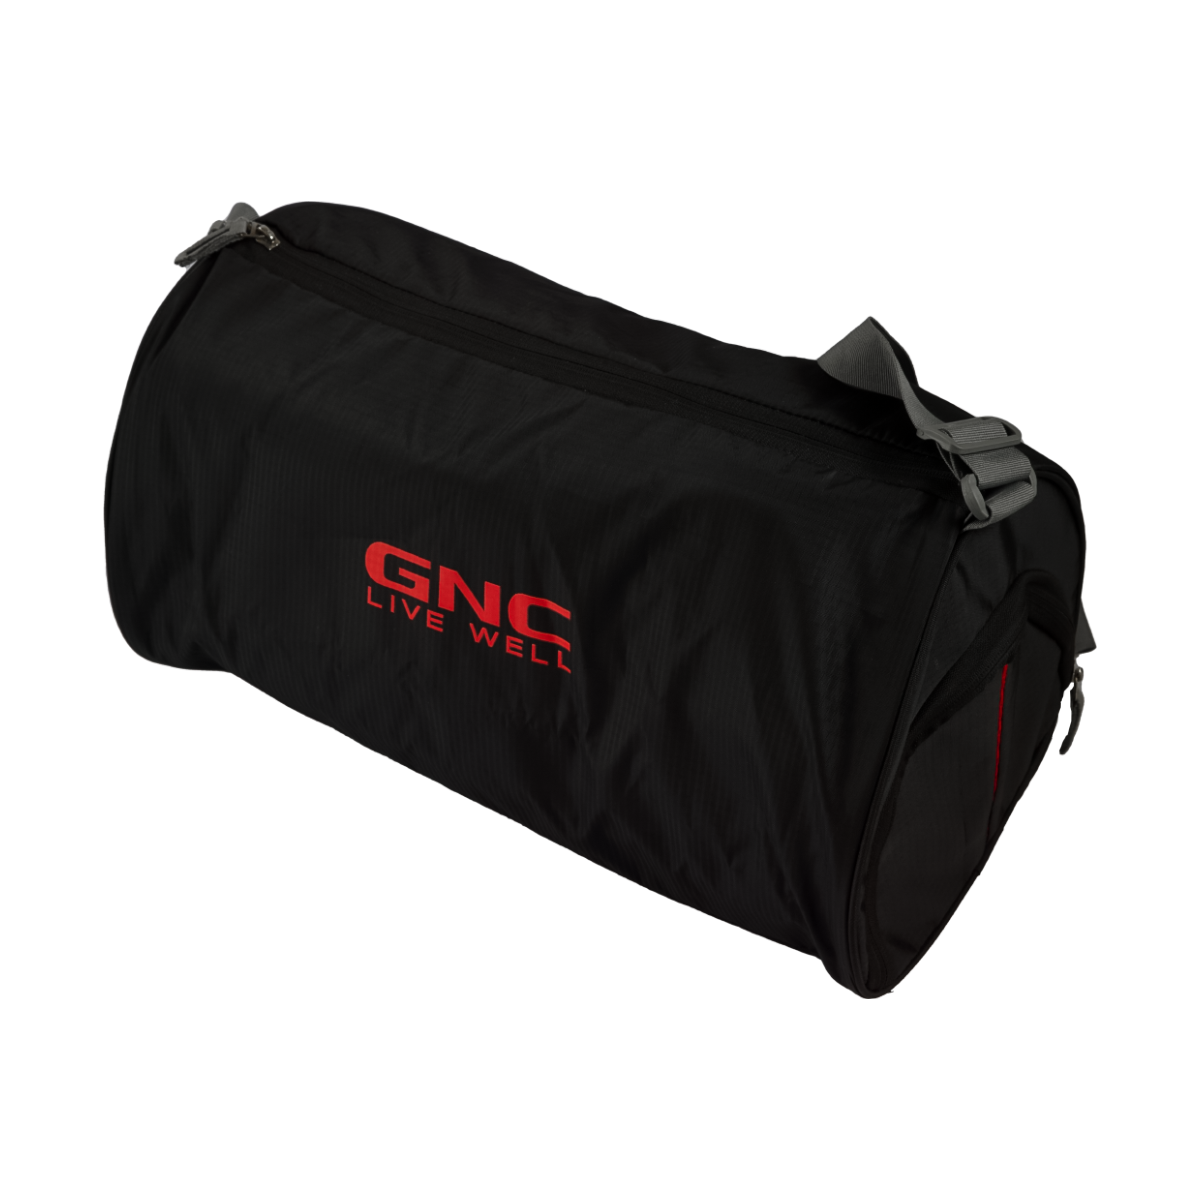 Emdom/MM TNT GYM-E Bag - Emdom USA Tactical Gear